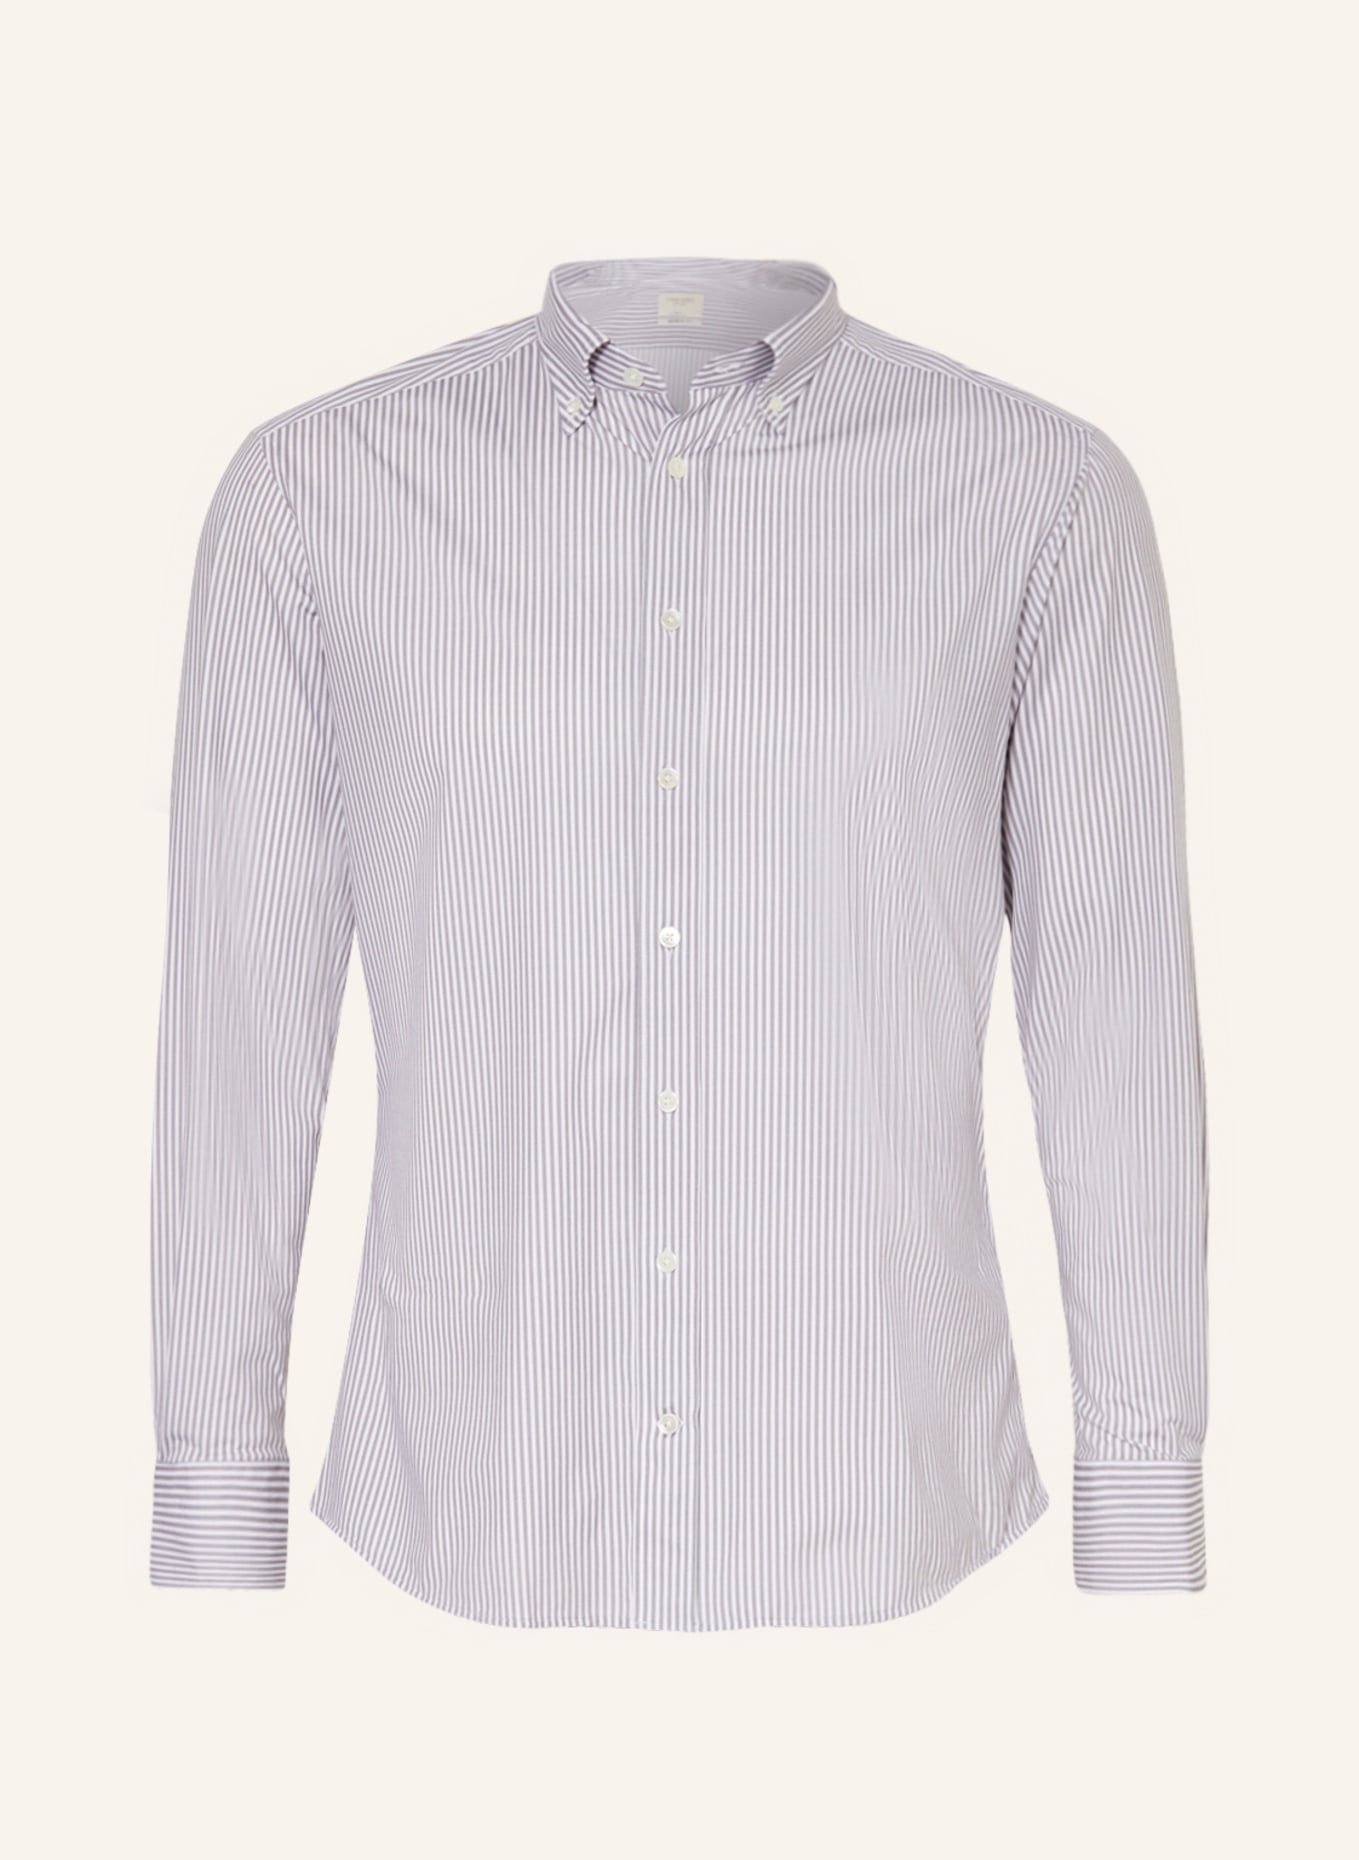 TRAIANO Jerseyhemd Slim Fit, Farbe: WEISS/ GRAU (Bild 1)